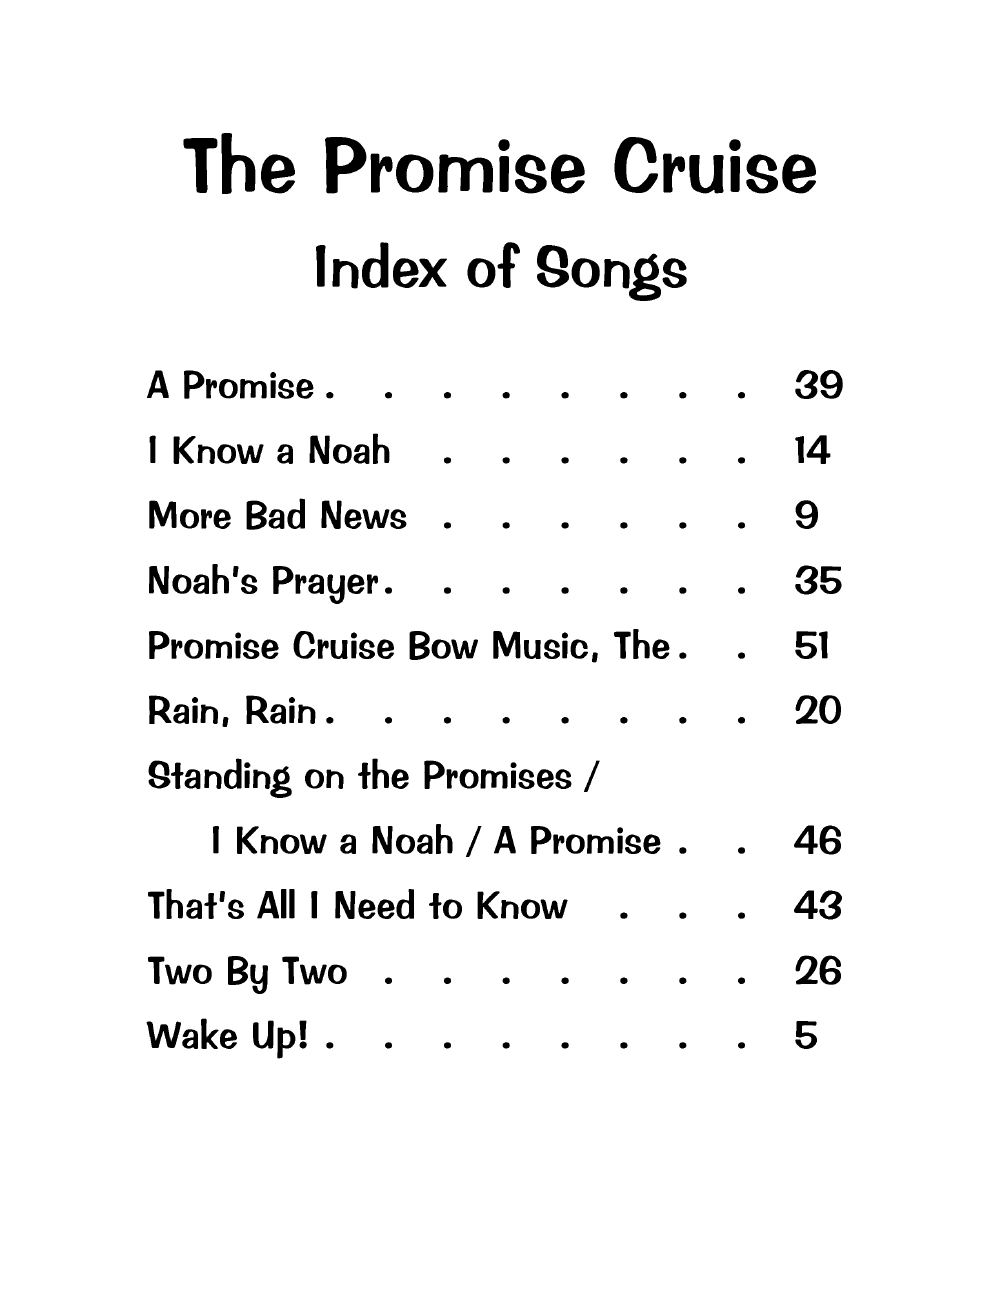 The Promise Cruise Kids Scores/Lyric Sheets pdf